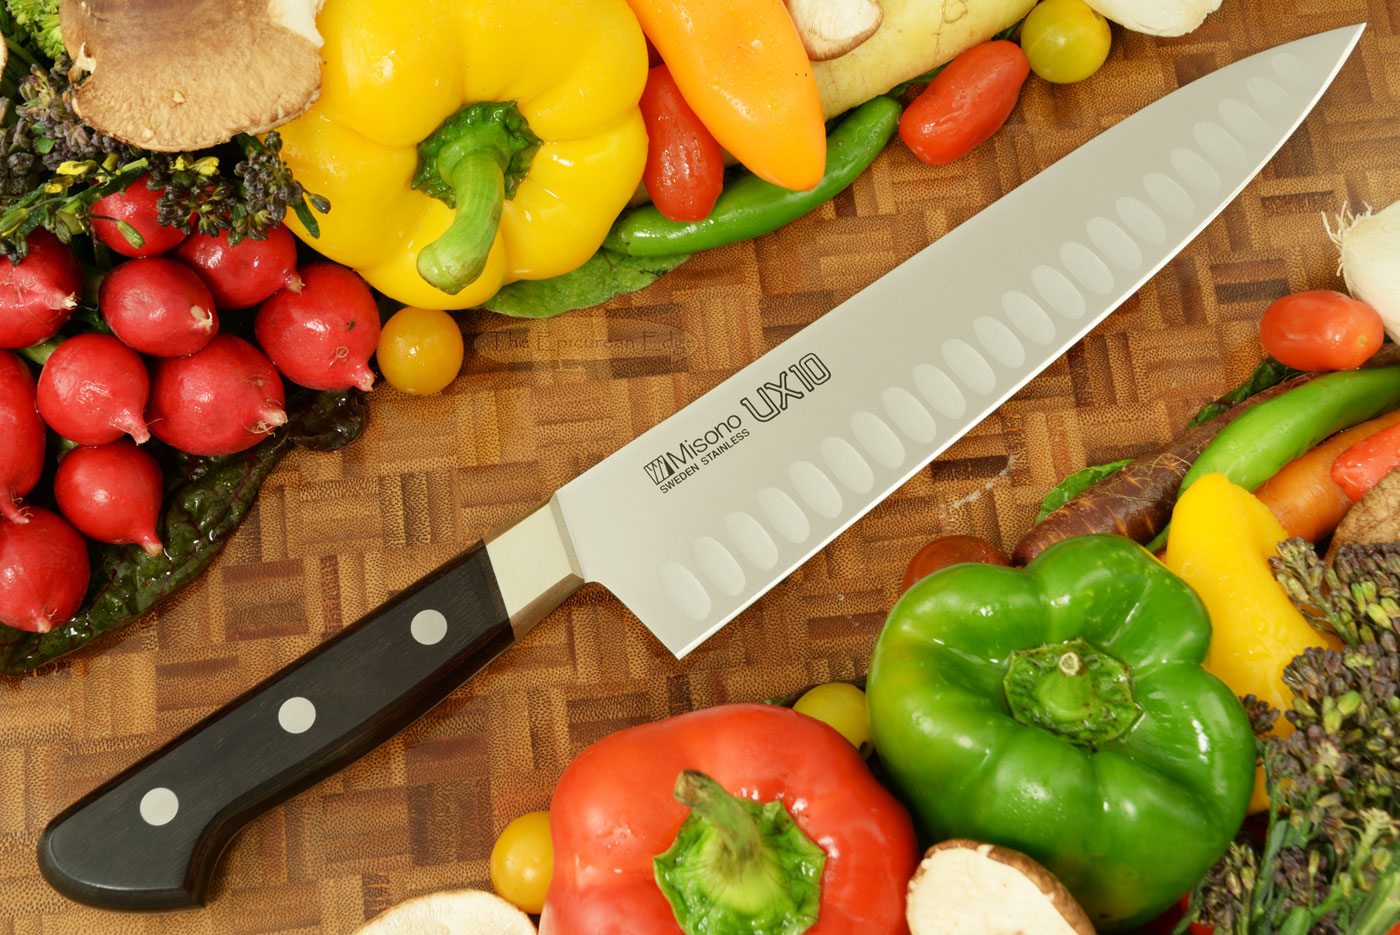 UX10 Chef's Knife - Gyuto, Granton Edge - 9 1/2 in. (240mm) - No. 763